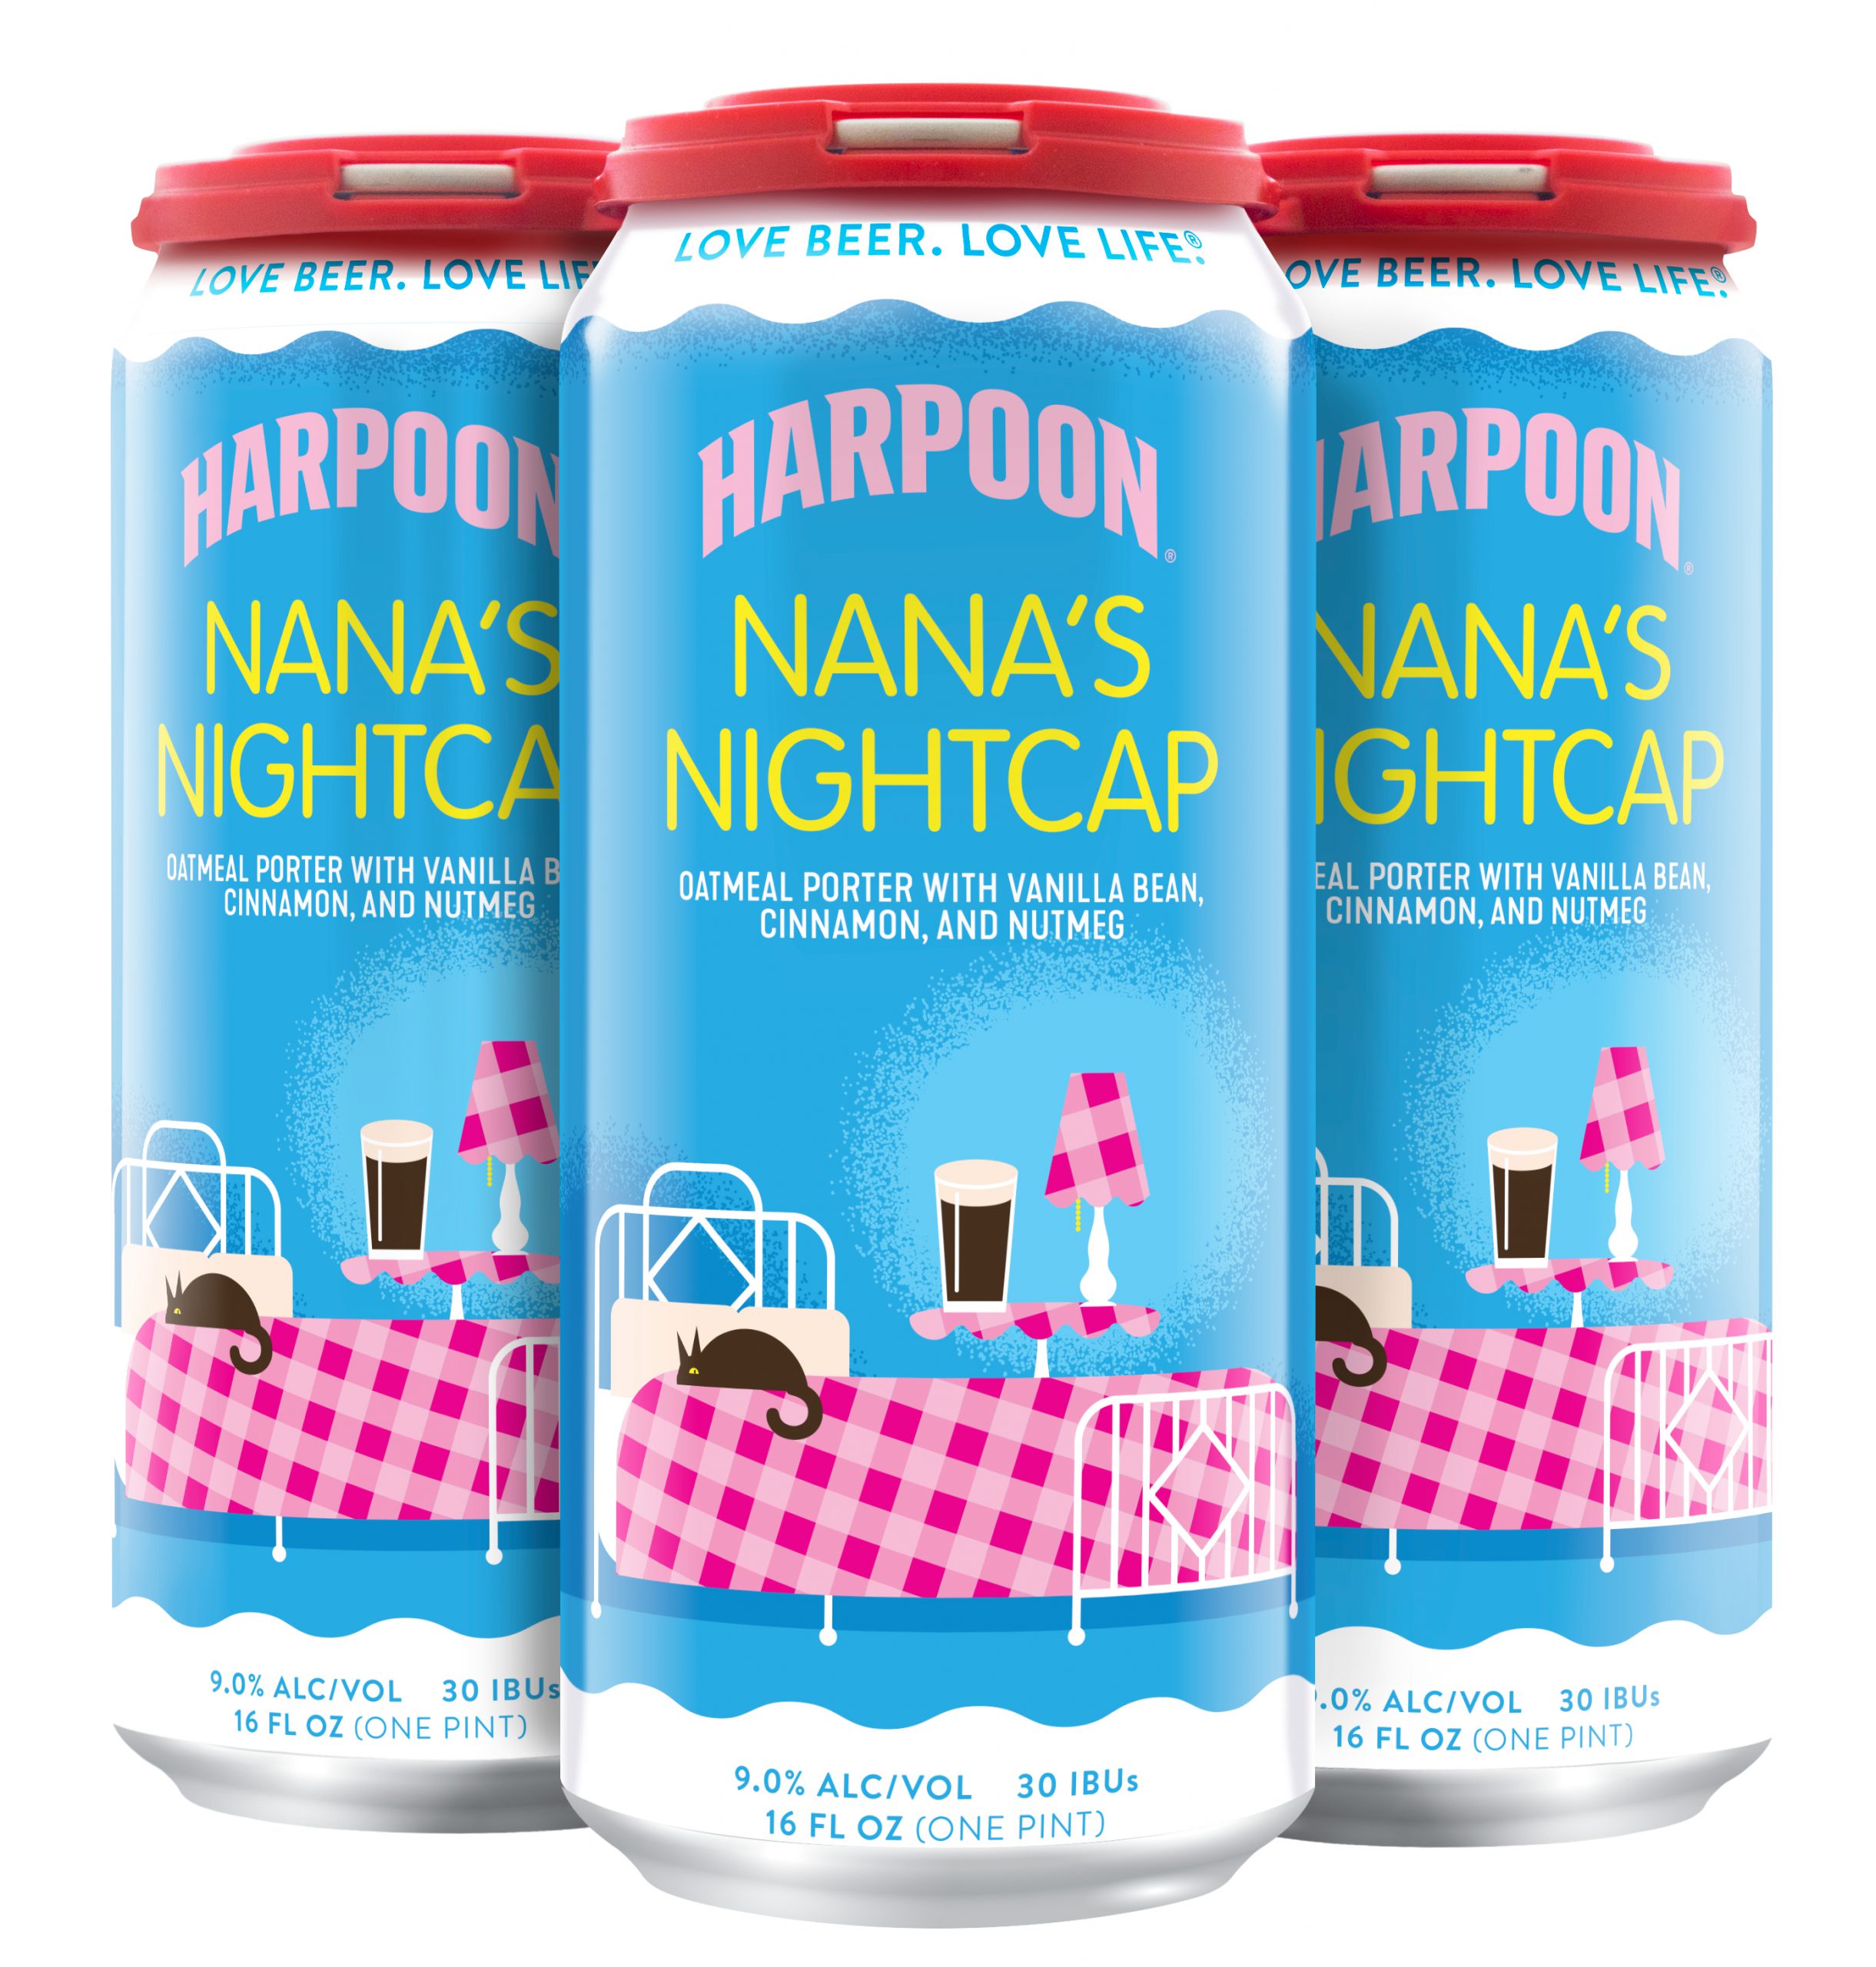 16 oz nana's nightcap can